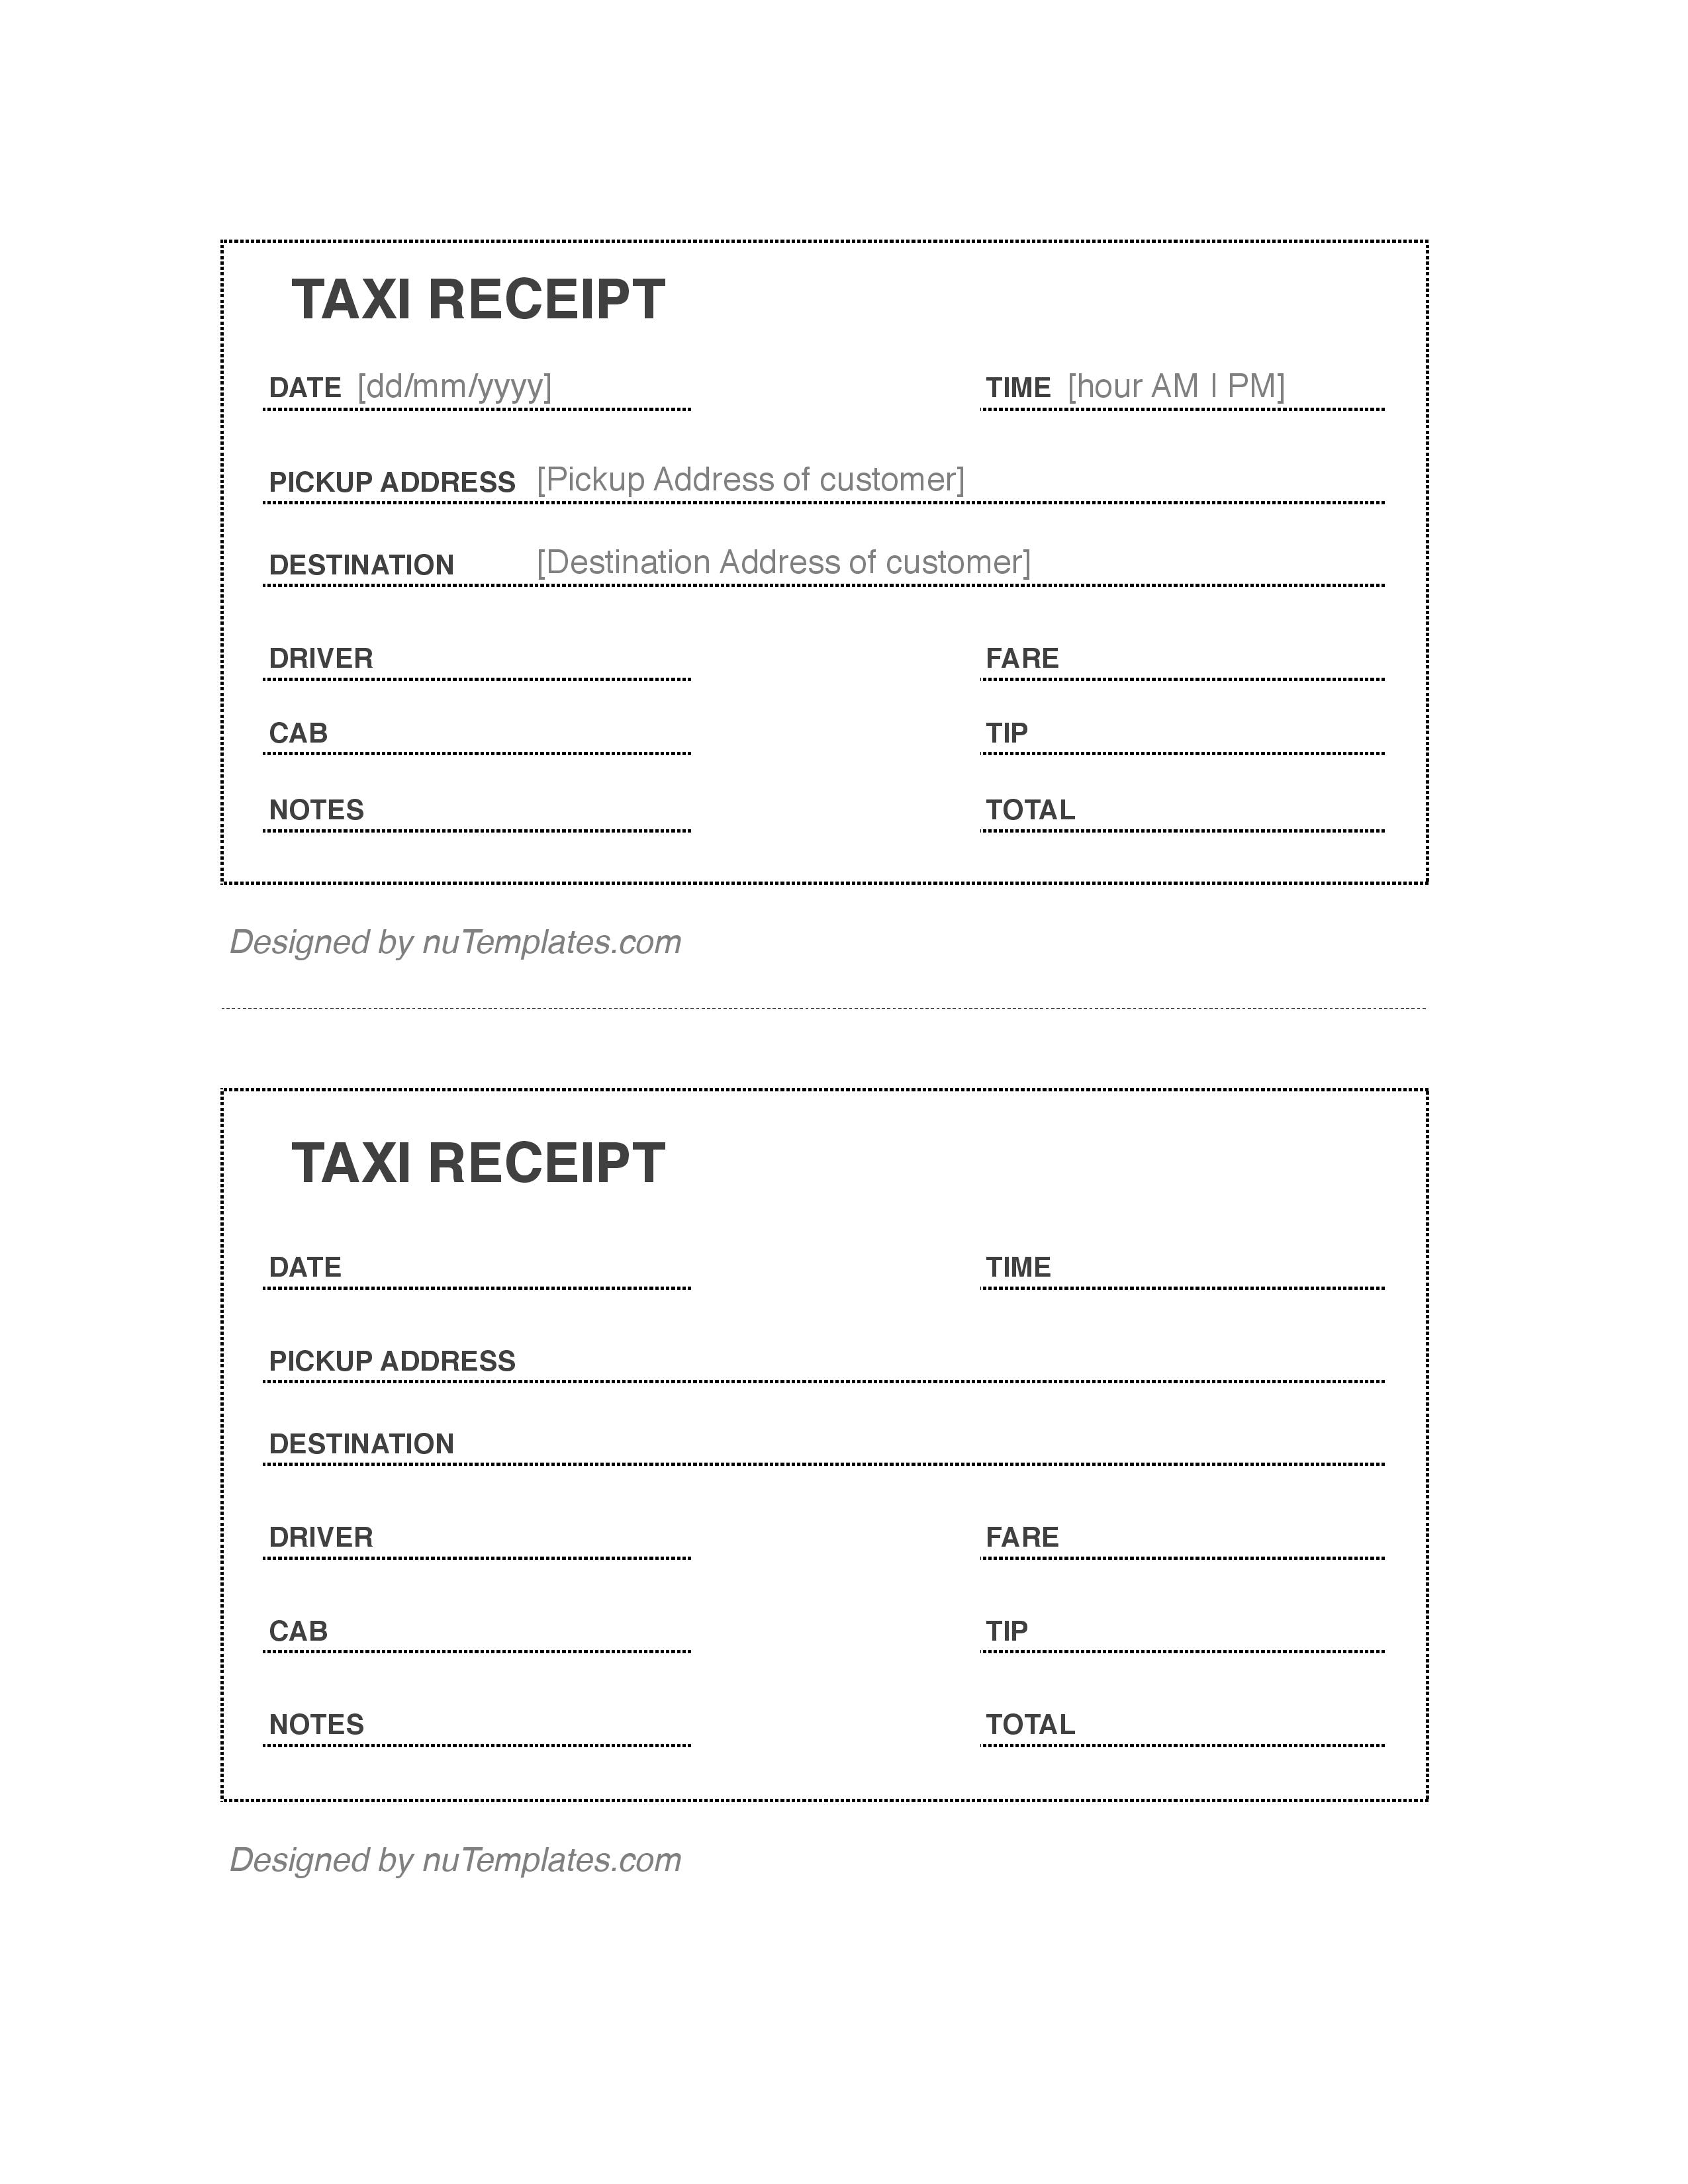 taxi-receipt-template-taxi-receipts-nutemplates